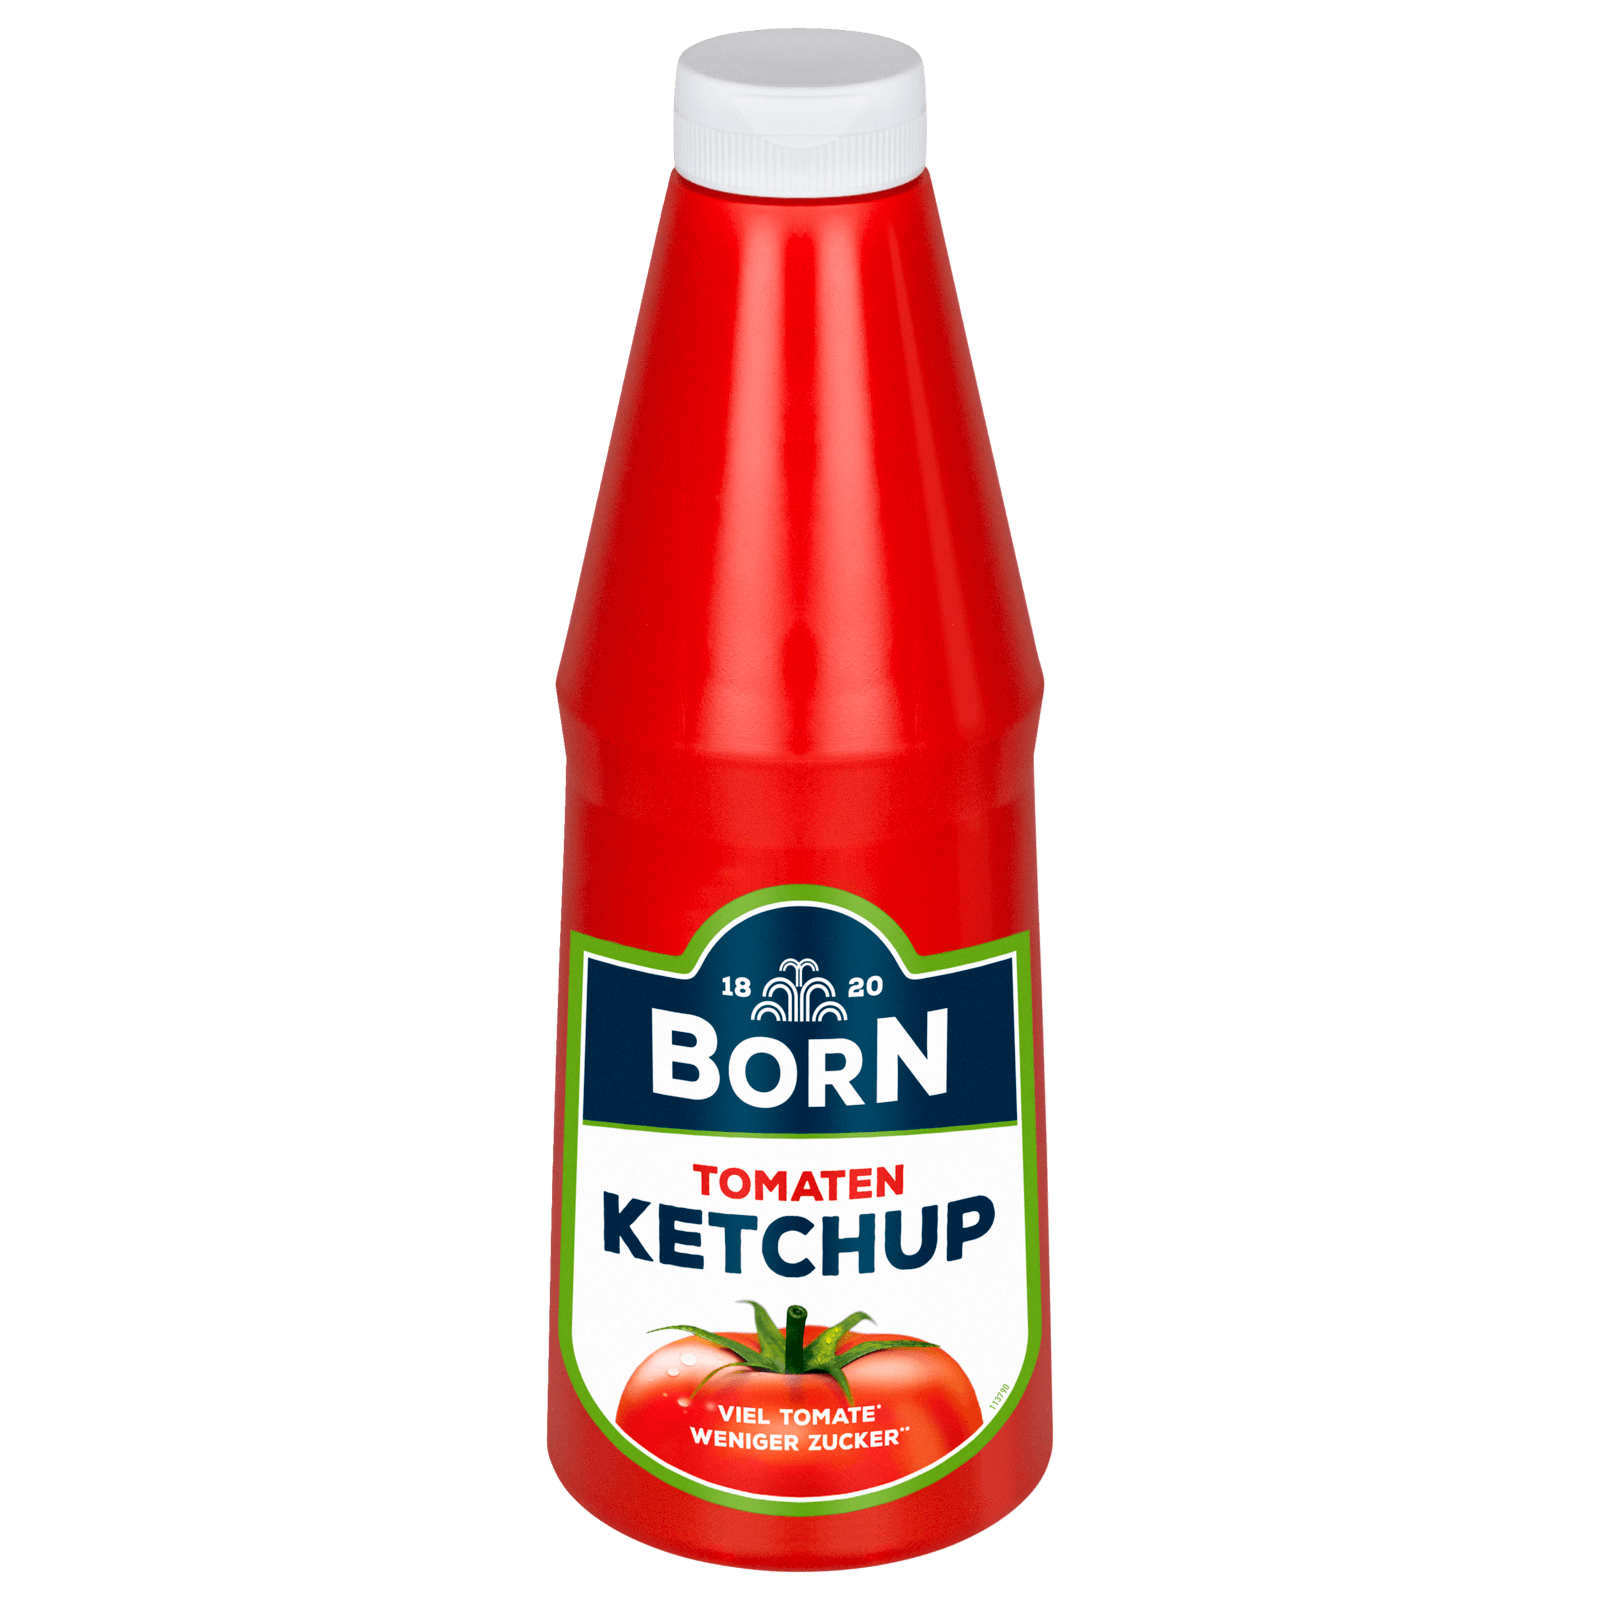 Born Tomaten Ketchup 1l bei REWE online bestellen!